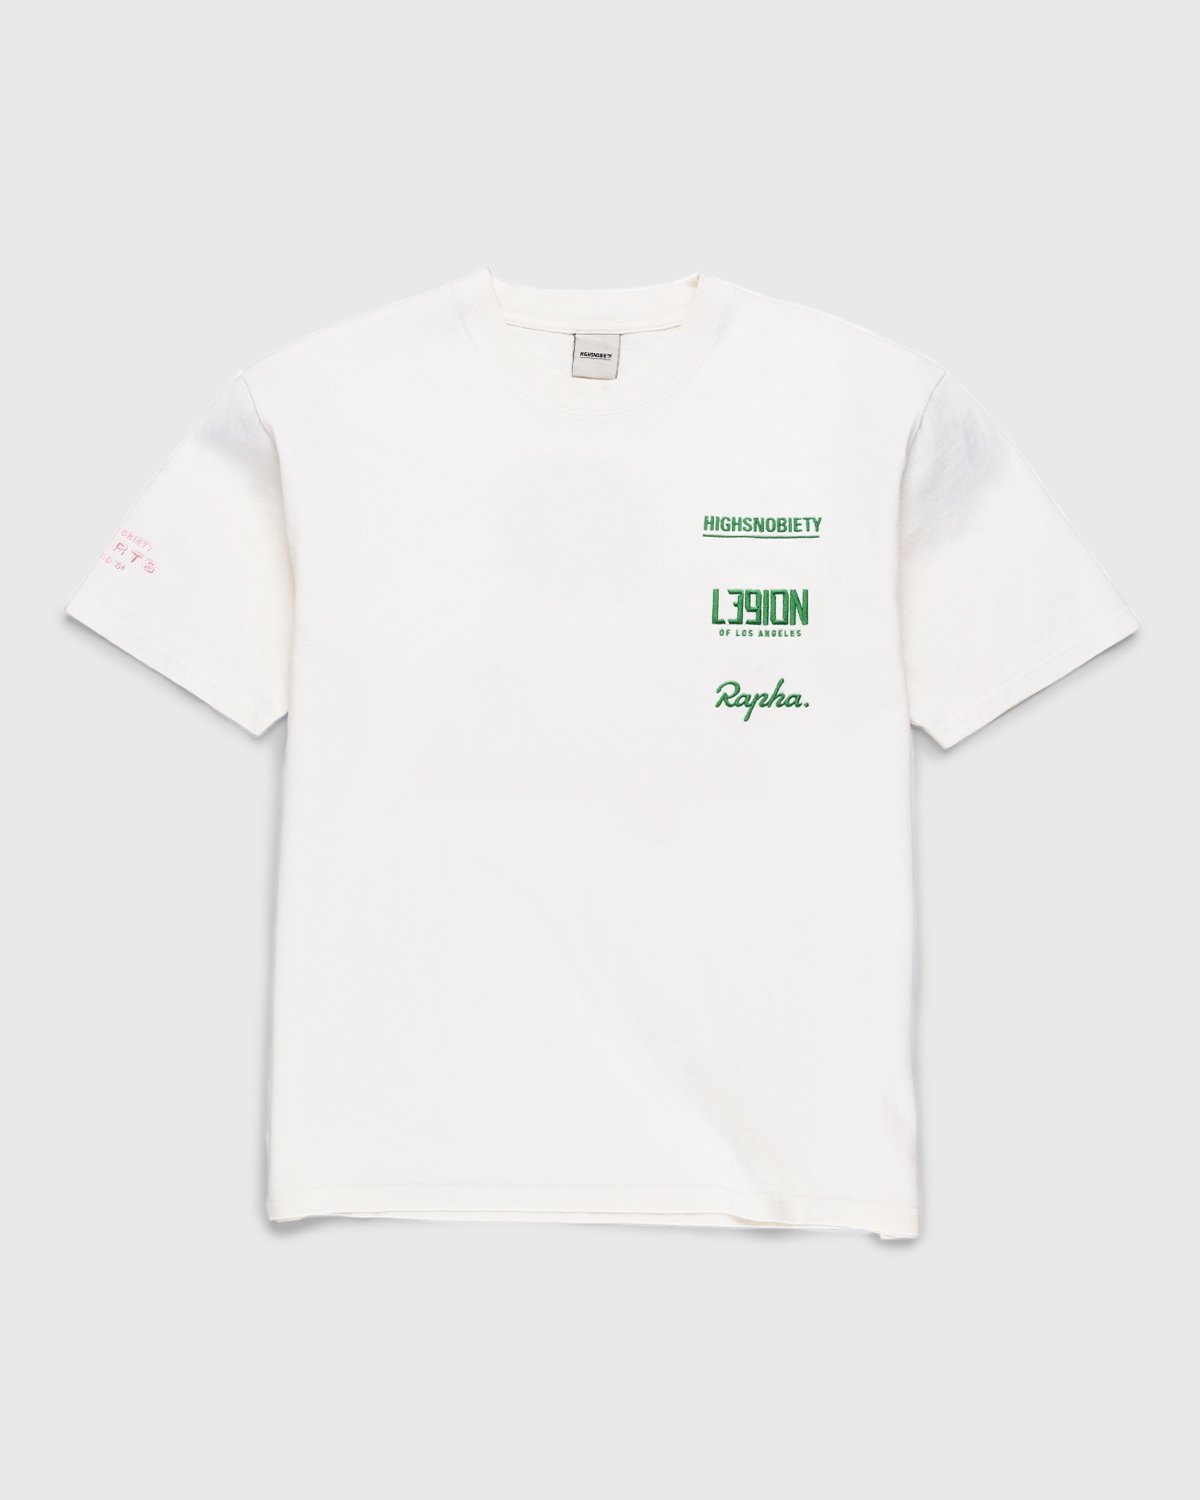 Rapha x L39ION of LA x Highsnobiety - HS Sports T-Shirt White - Clothing - White - Image 2